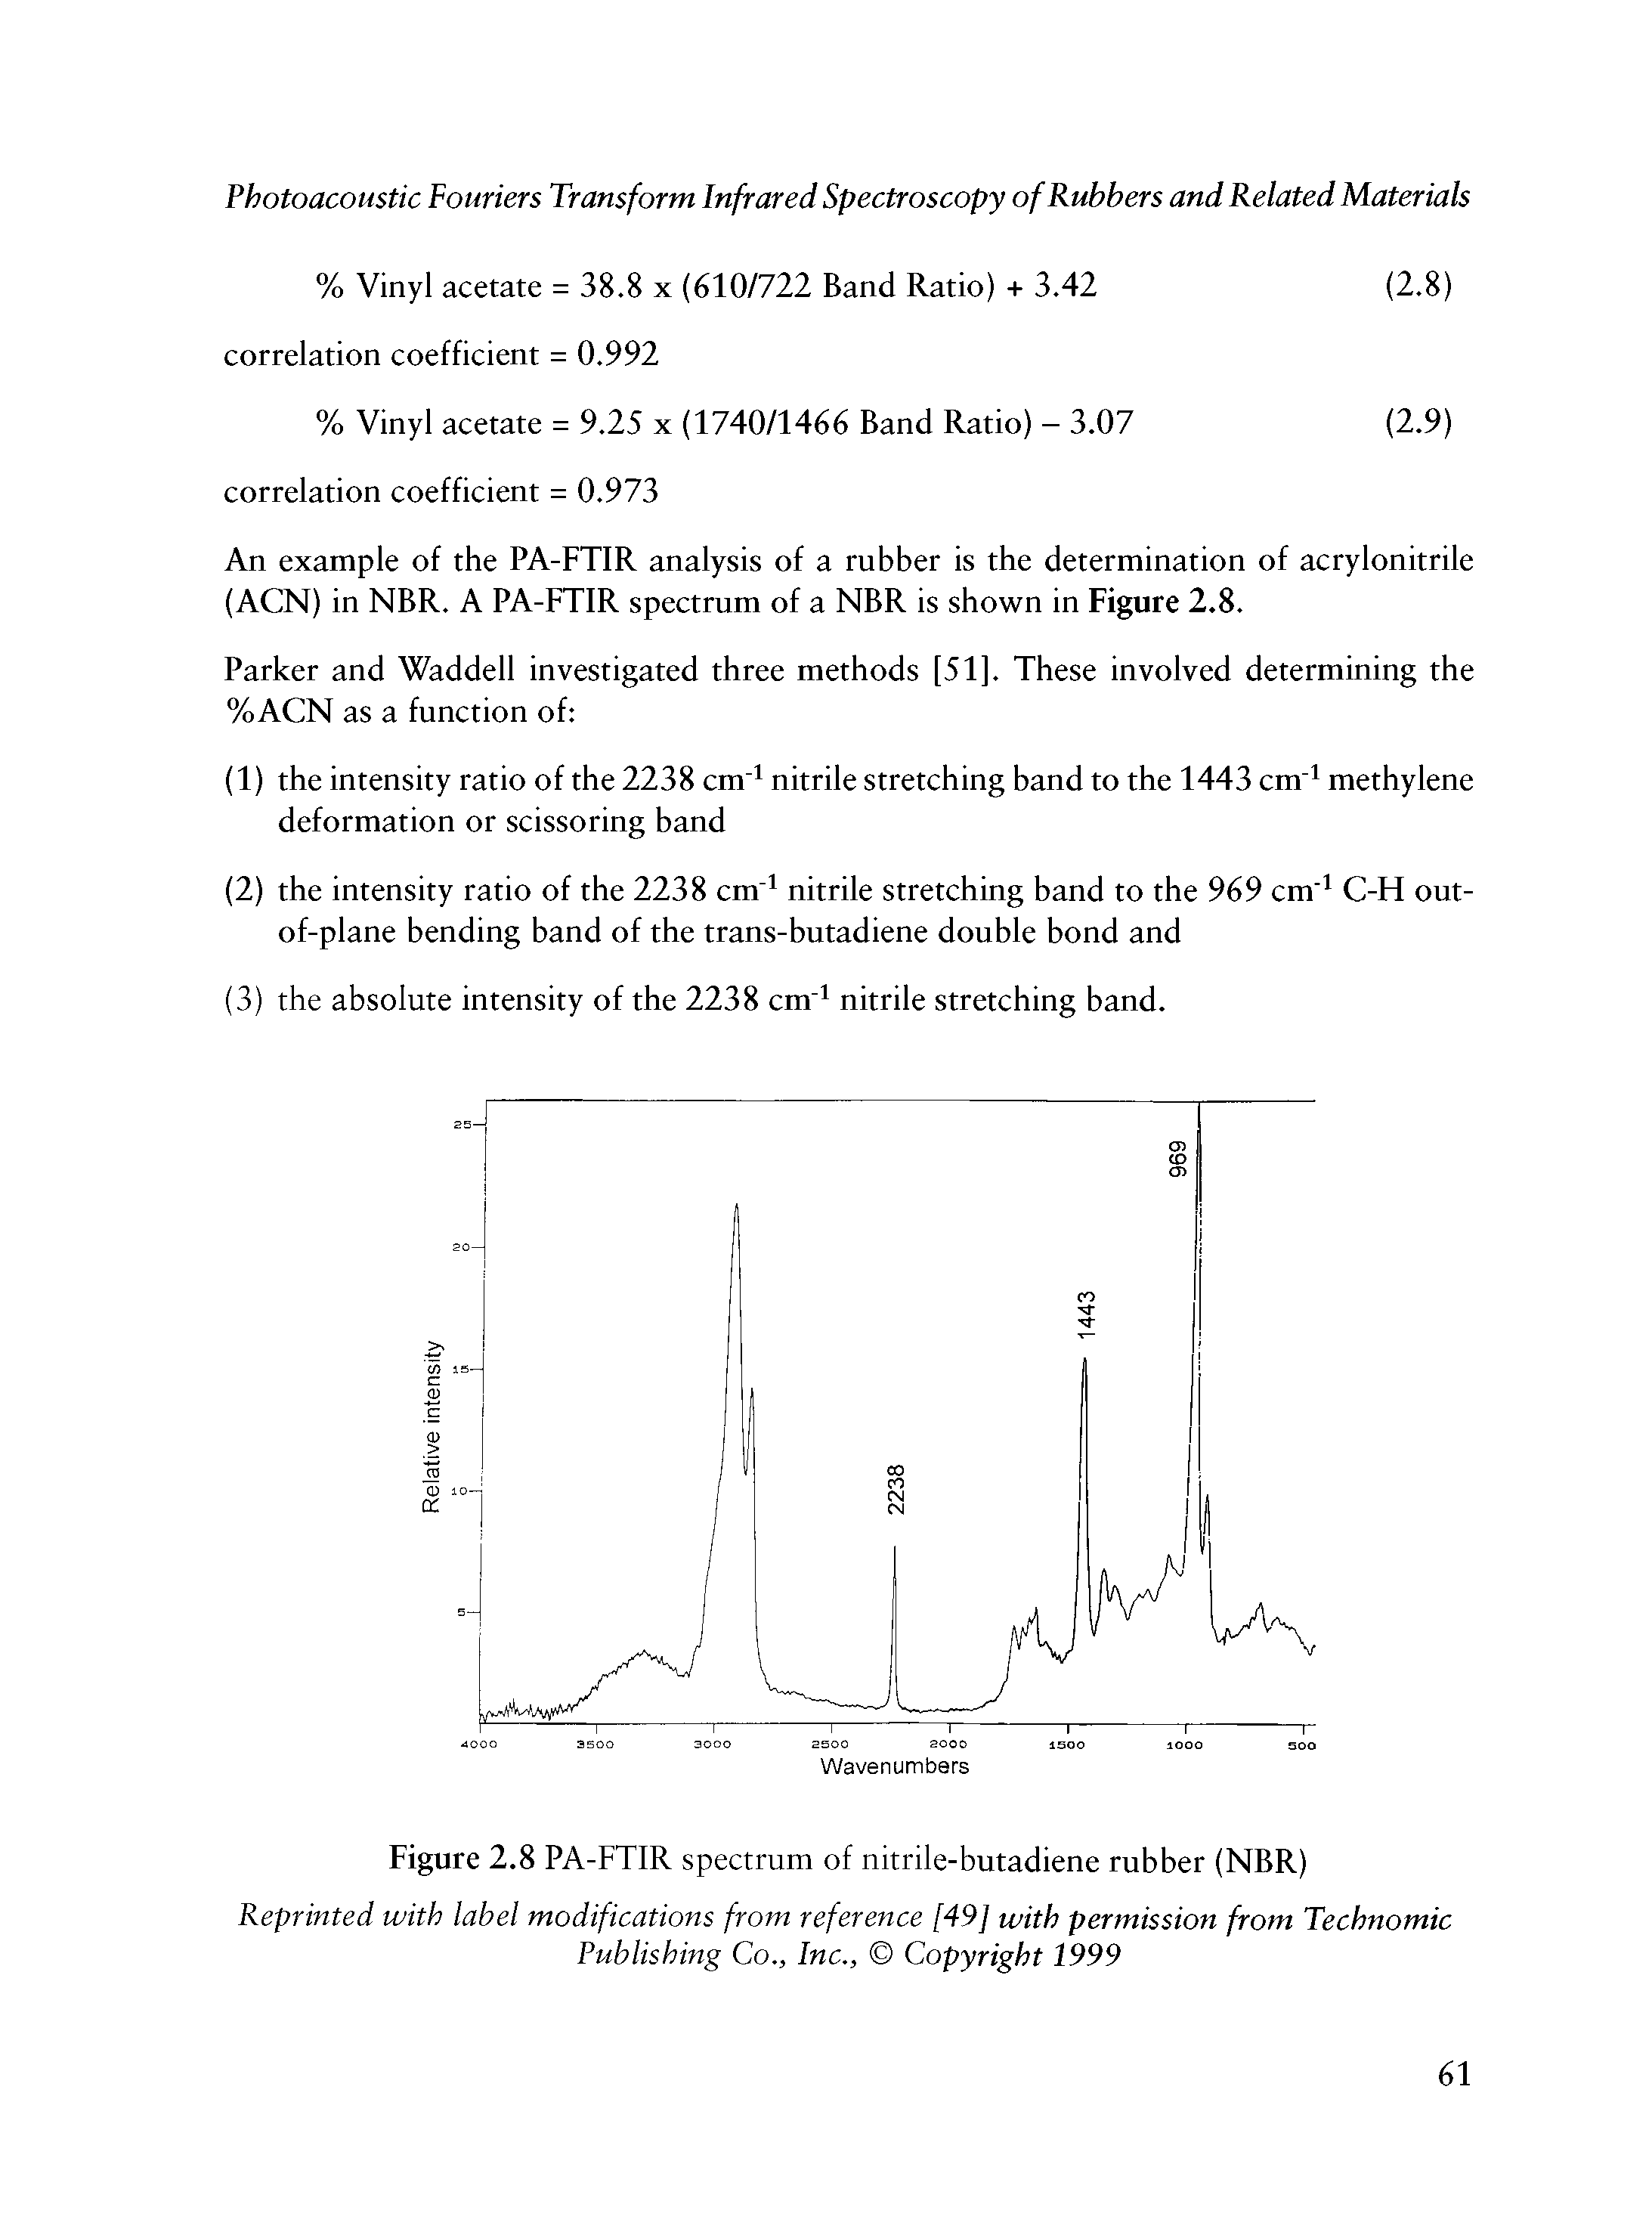 Figure 2.8 PA-FTIR spectrum of nitrile-butadiene rubber (NBR)...